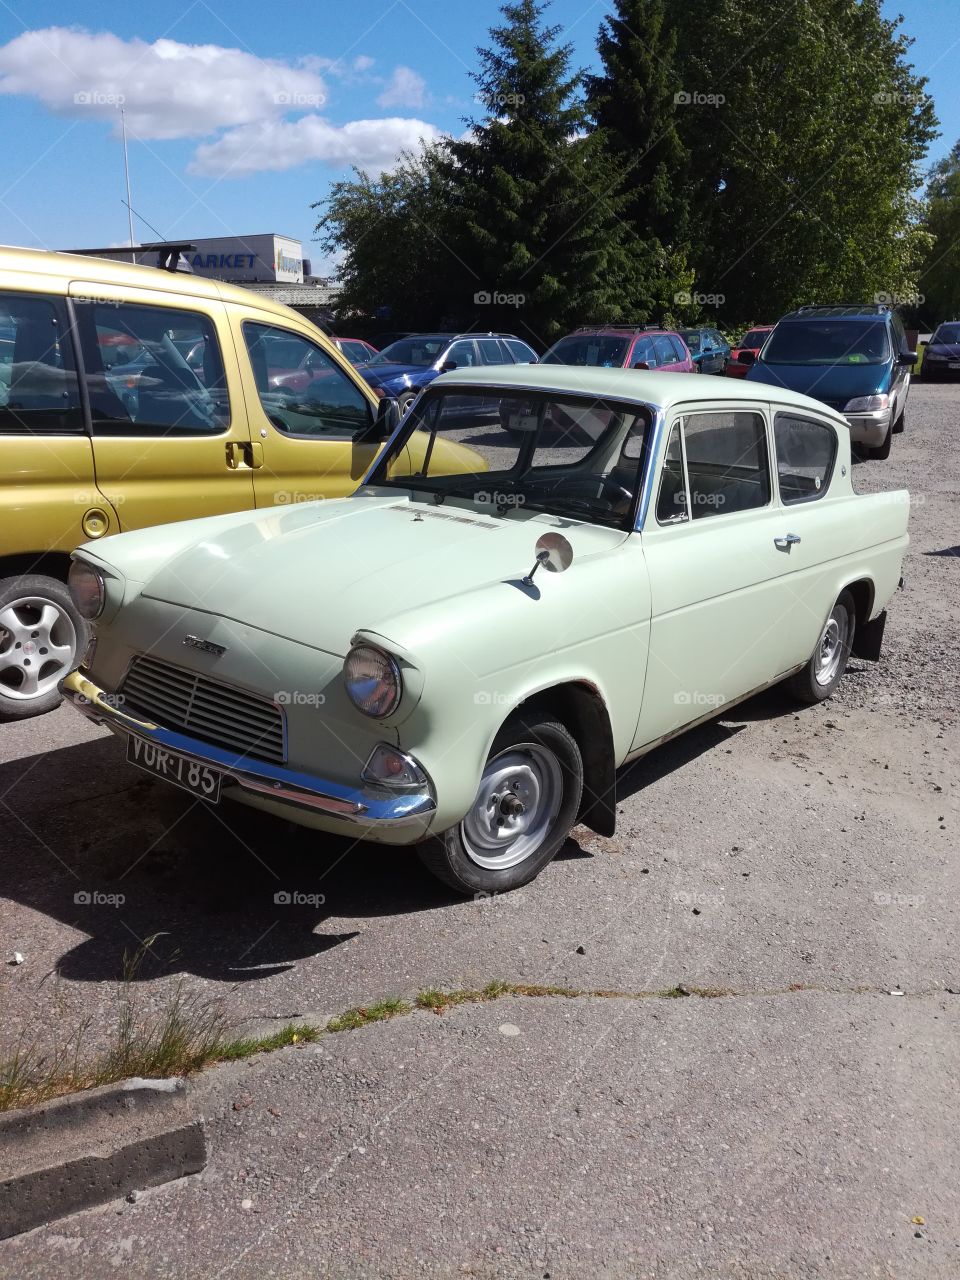 my Ford Anglia 1963